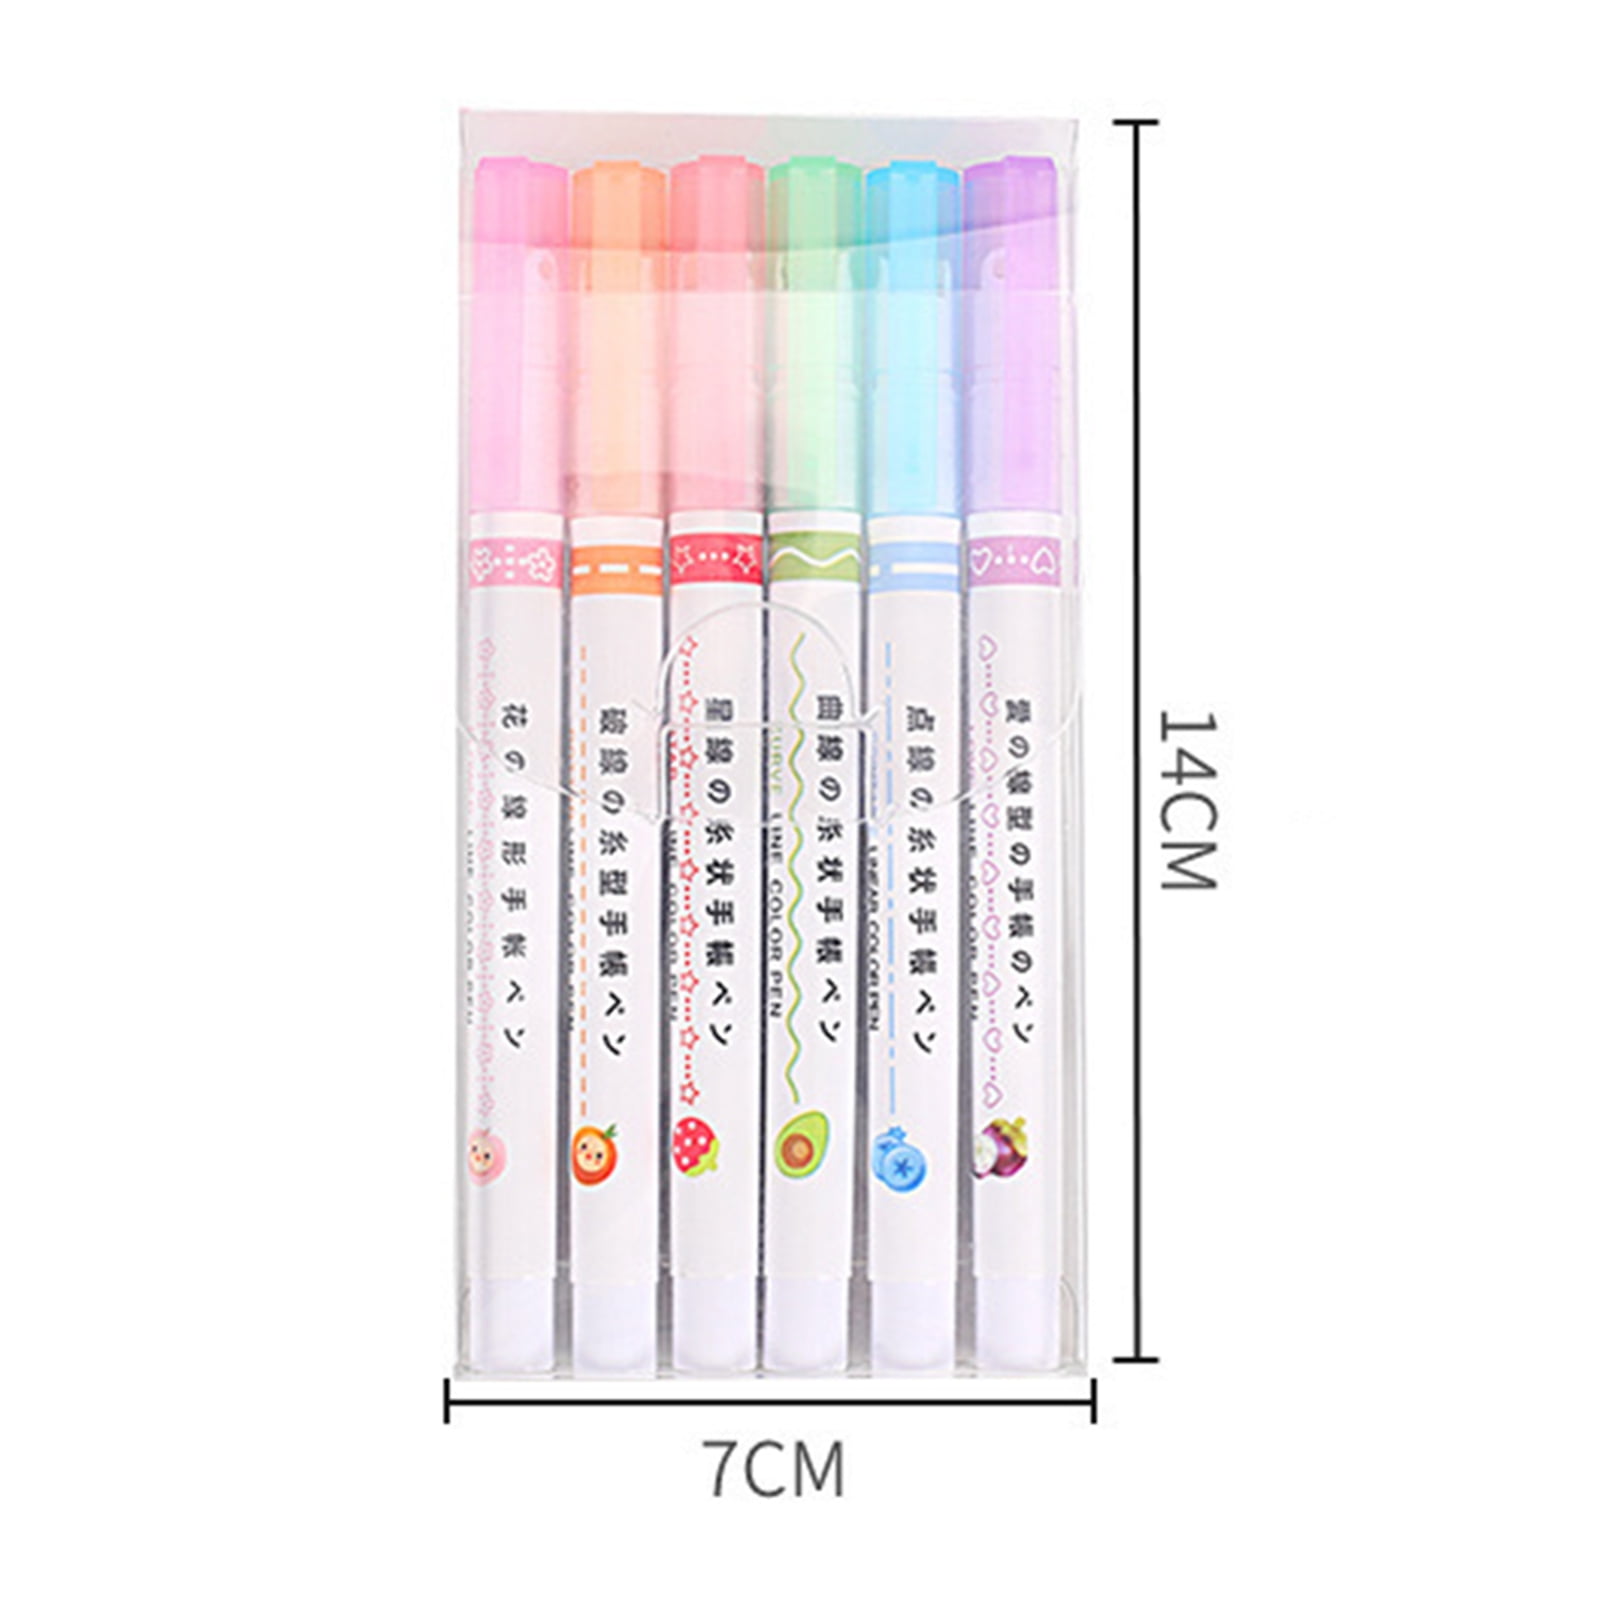 Curve Highlighter Pen Set,6 Assorted Colors & Curves Cute